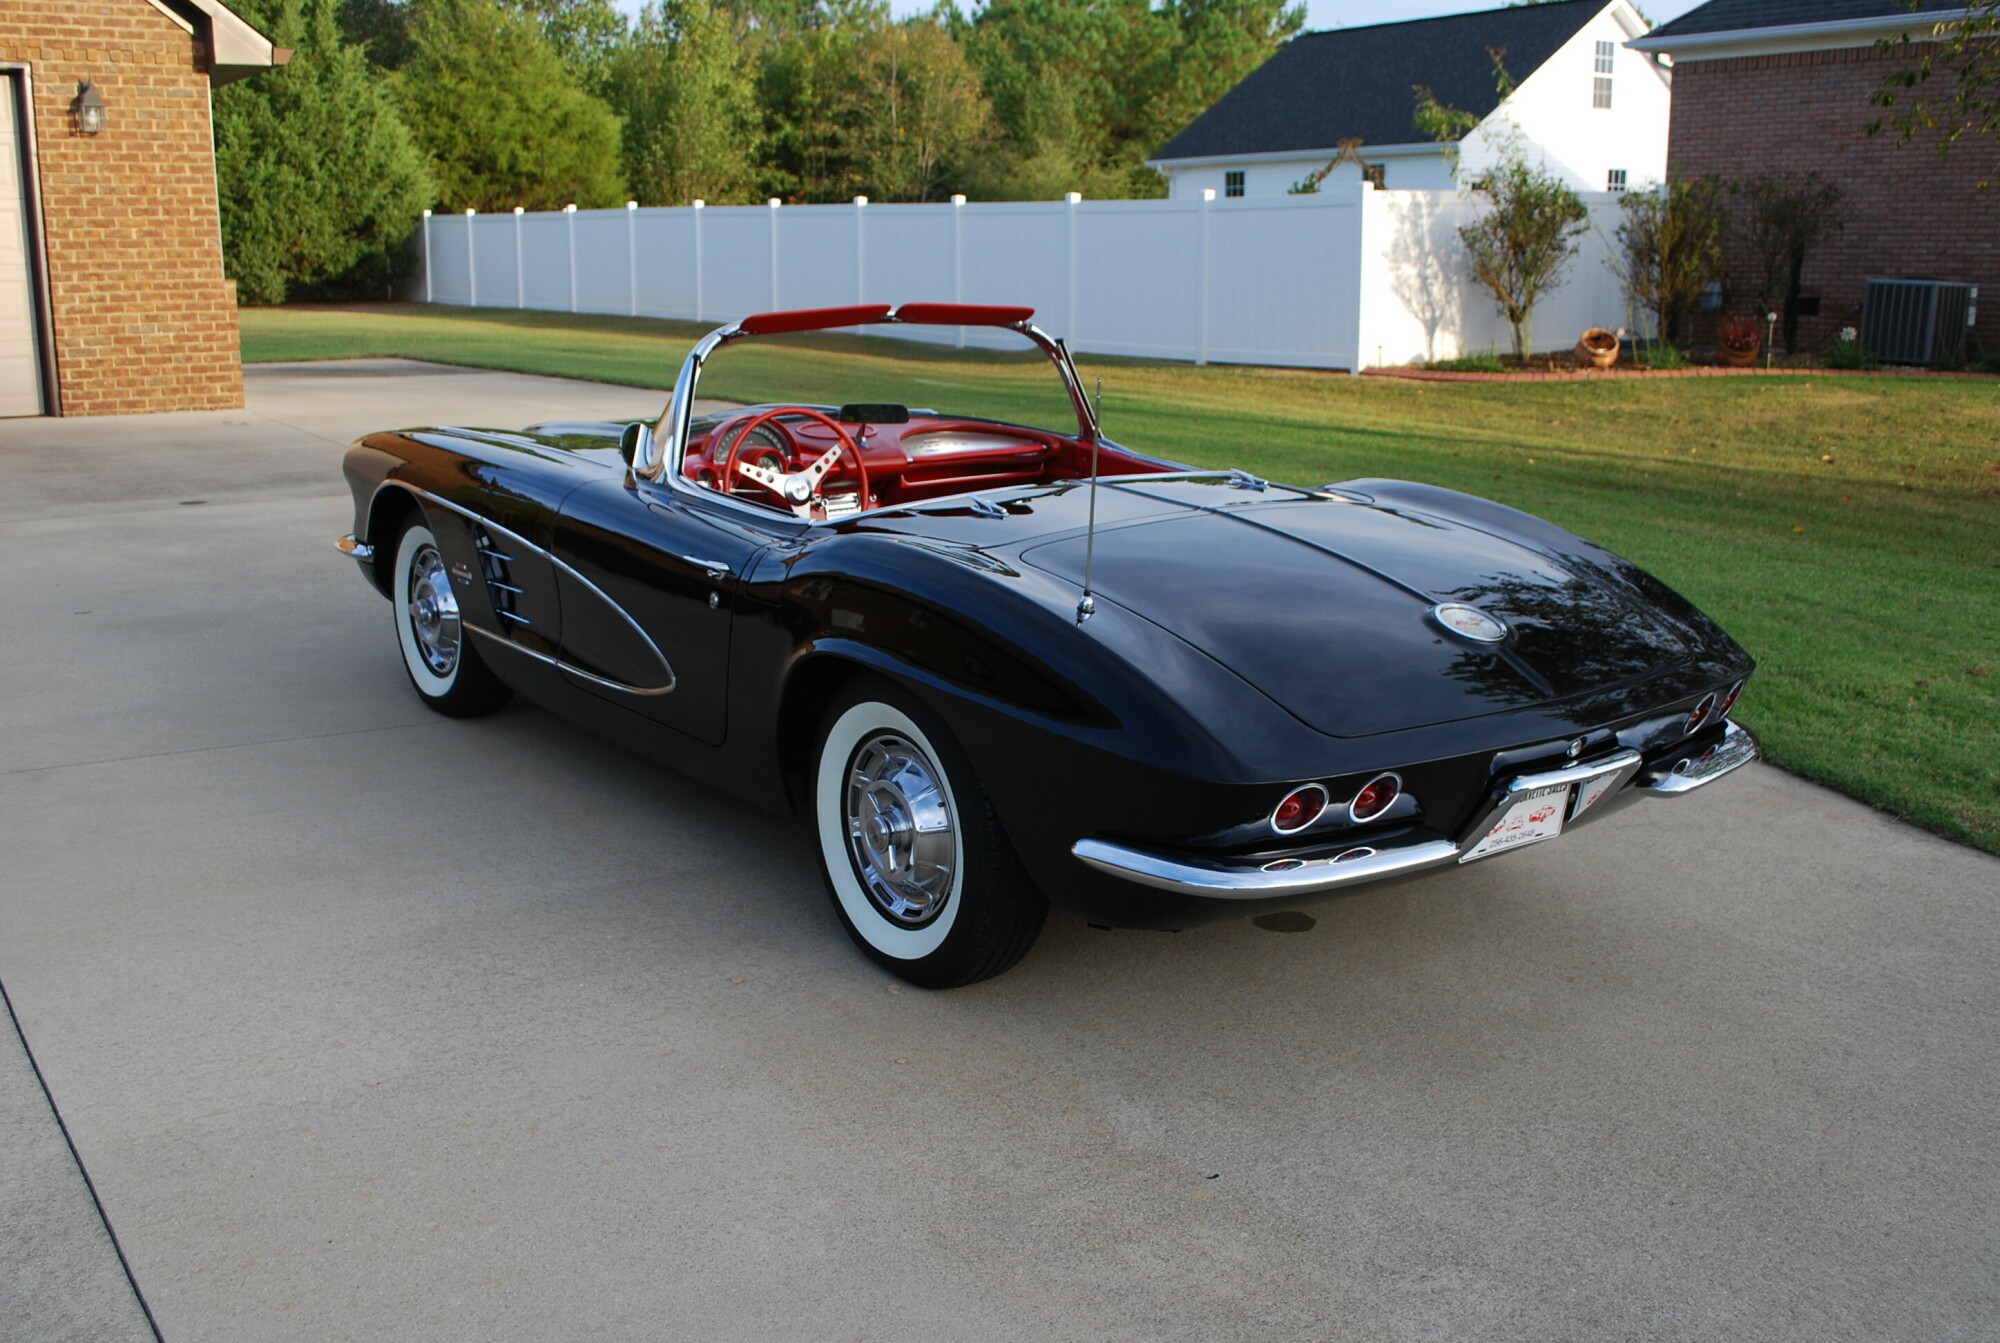 1961 Corvette convertible 283/270hp 2x4 carbs (Original) Unrestored. 